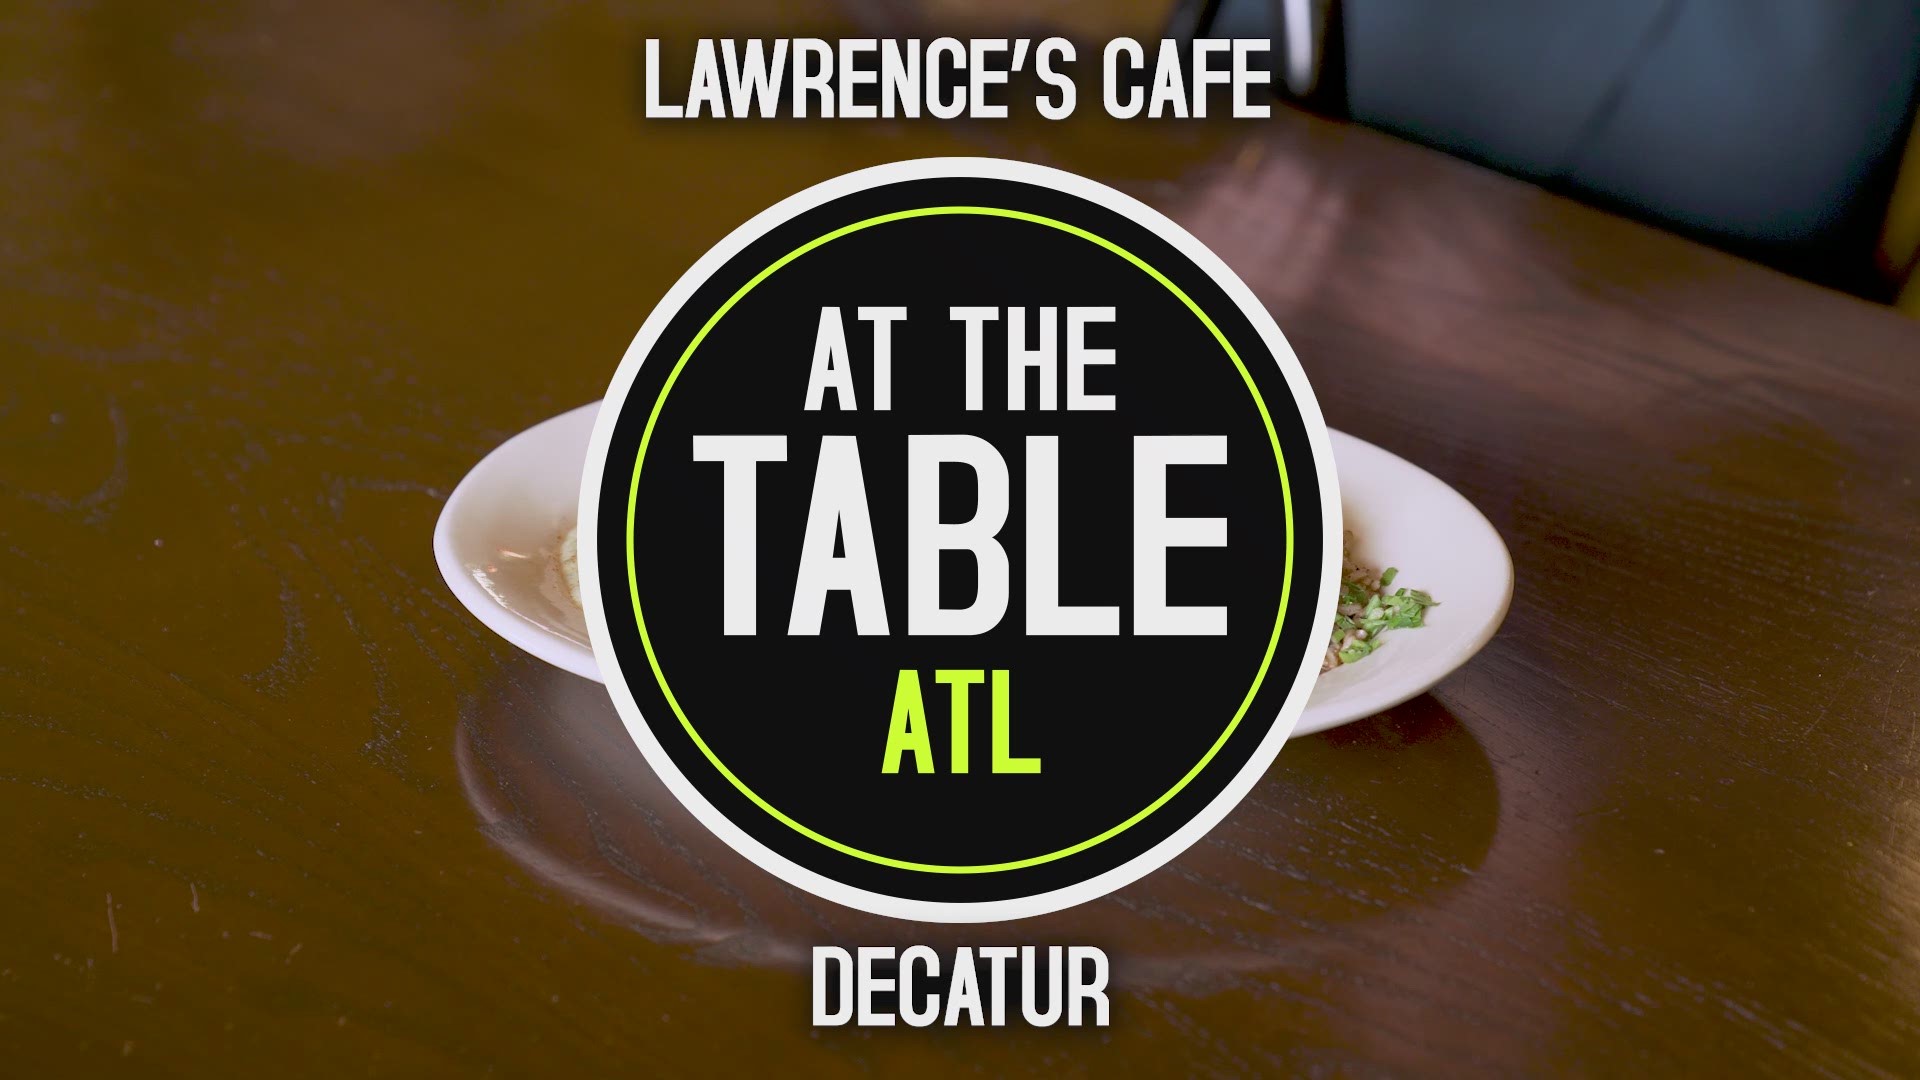 From Lebanon to metro Atlanta, Chef Tony recreates Lebanese favorites at Lawrence's Cafe